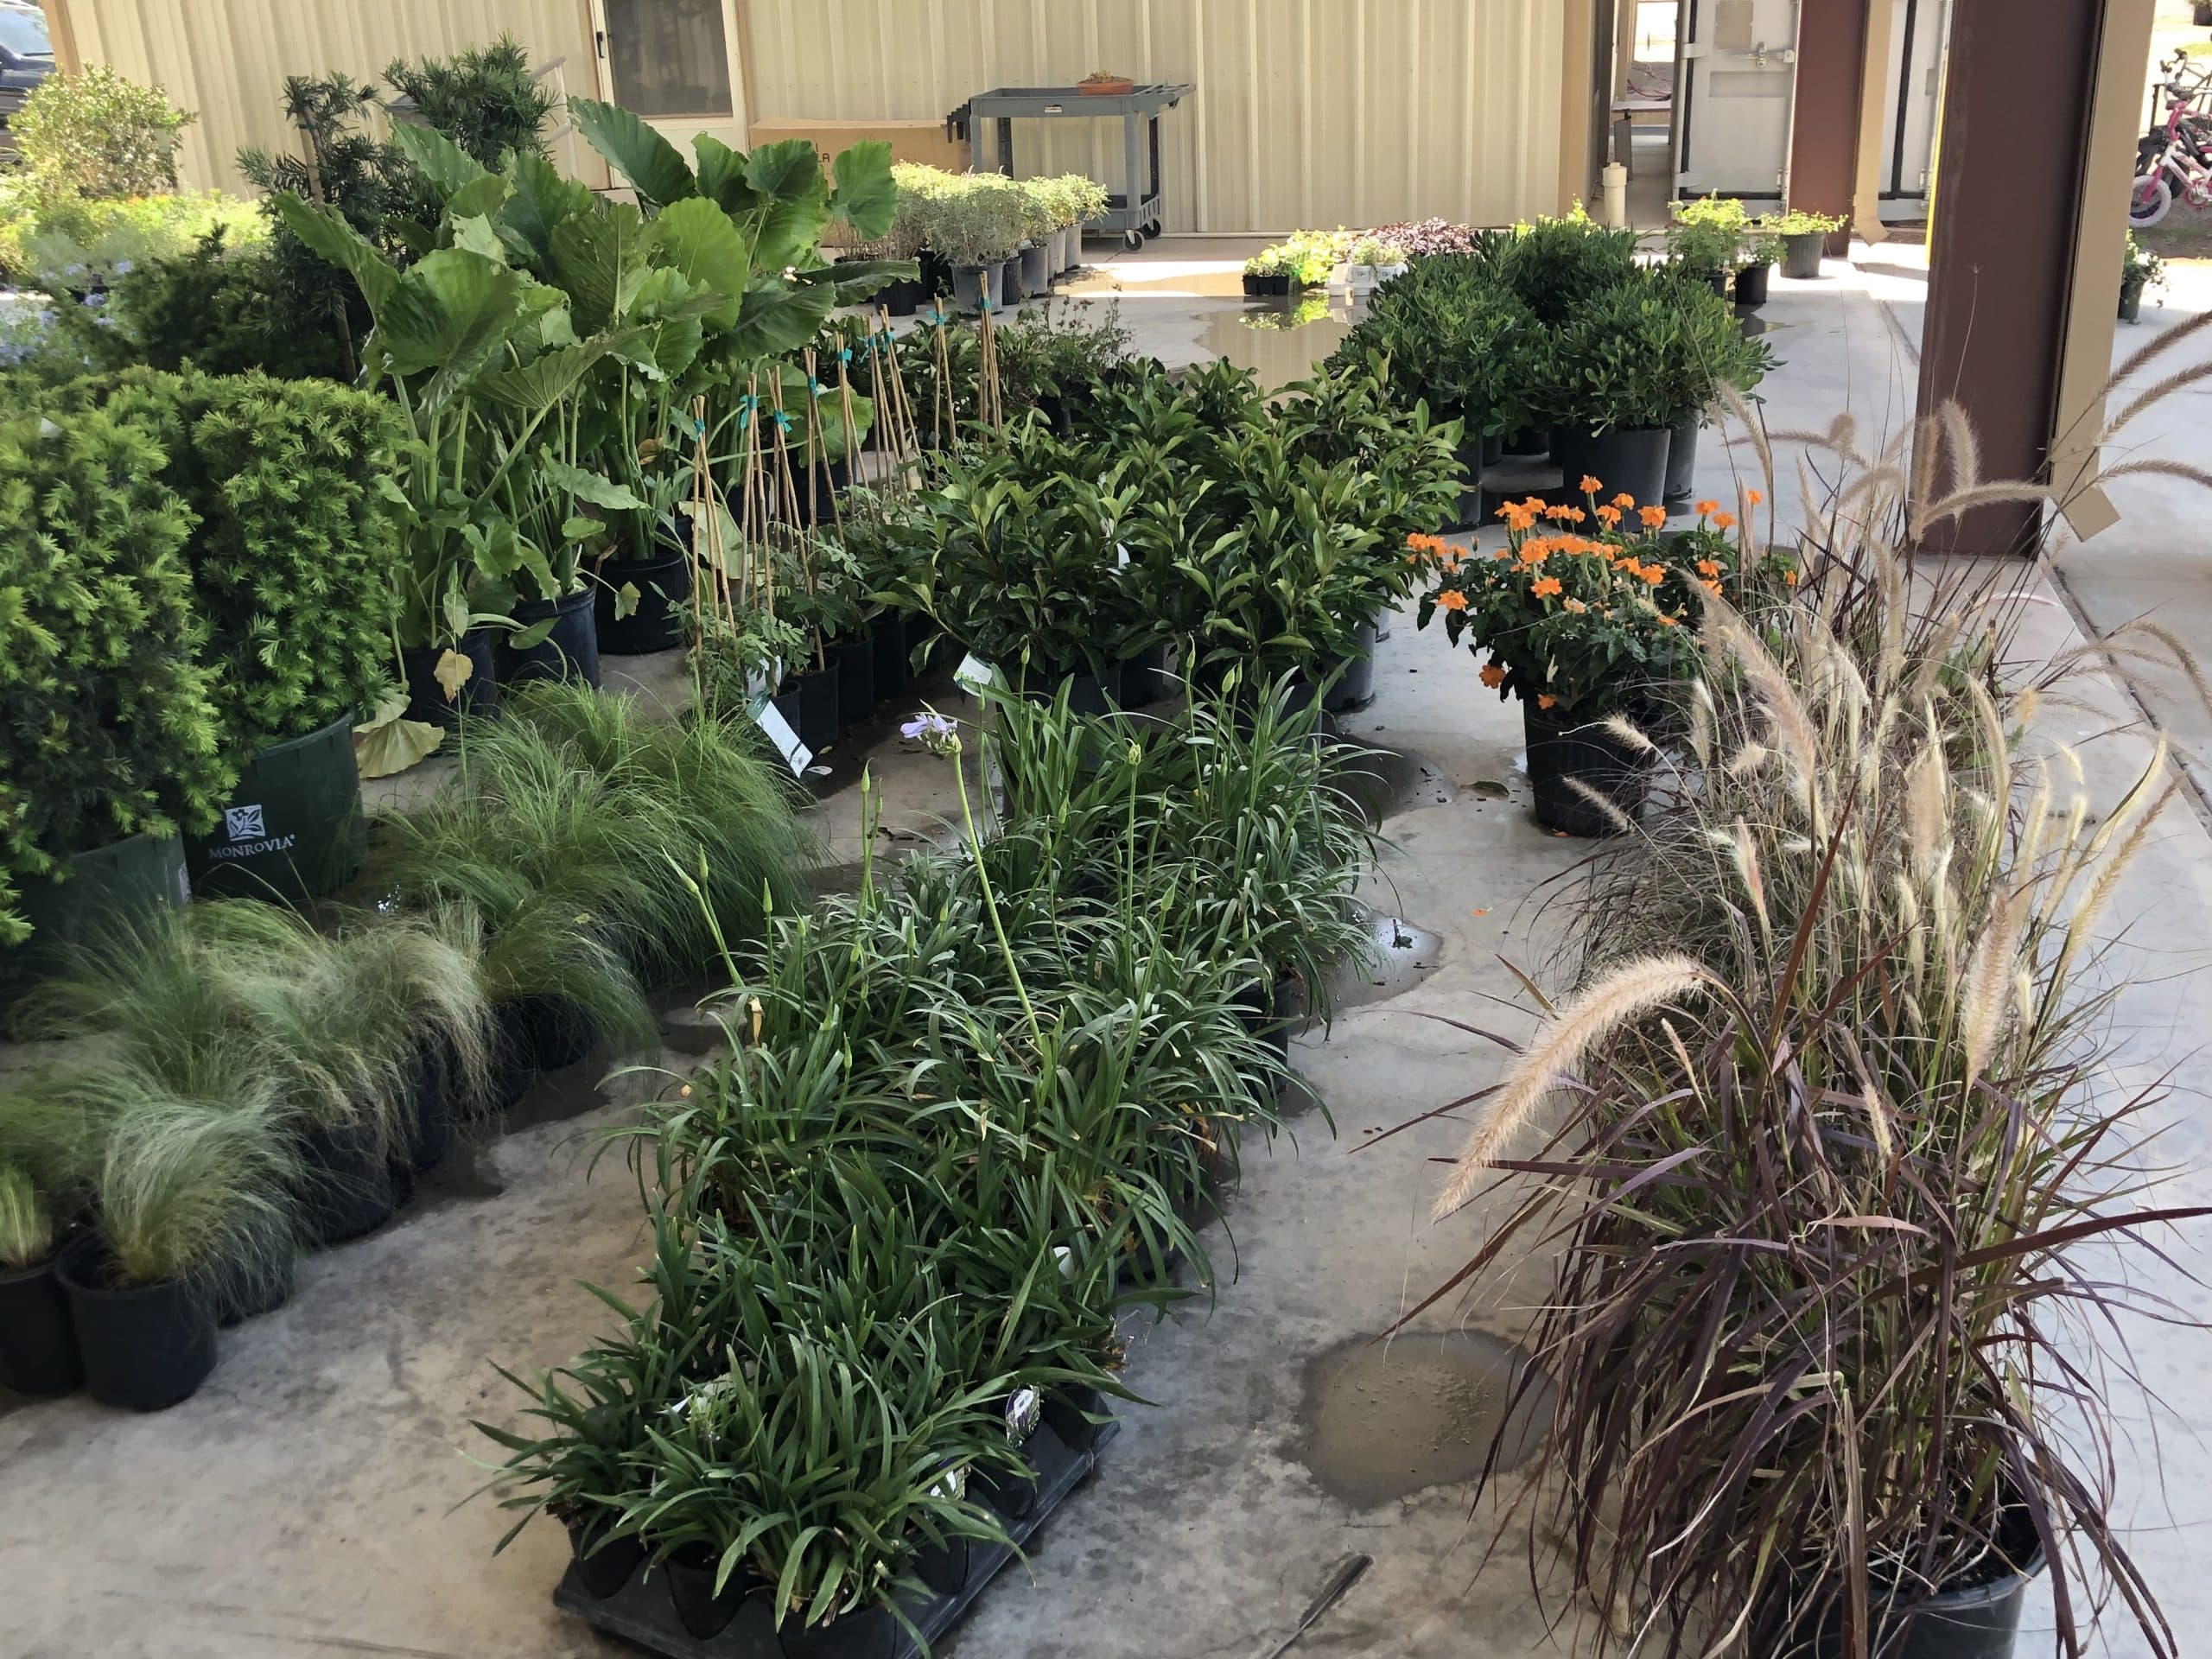 Collection of garden center plants